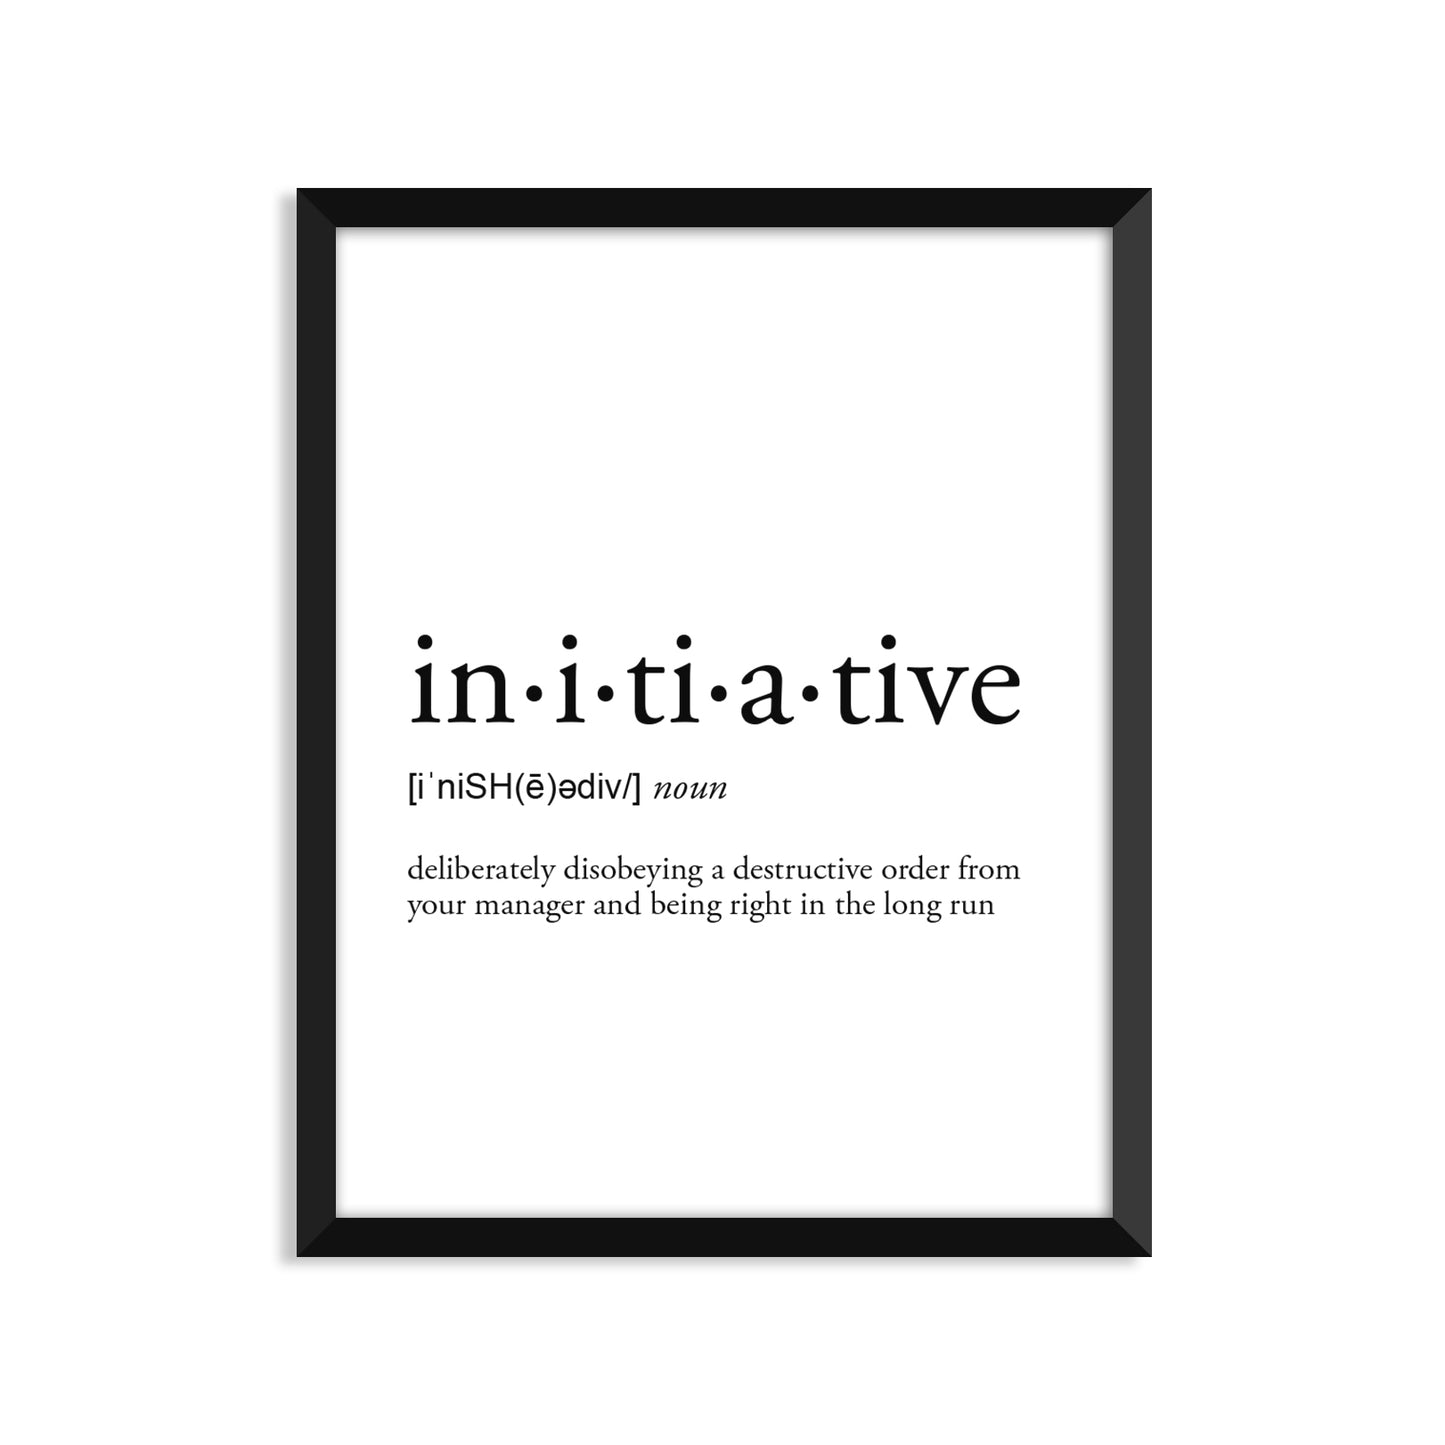 Initiative Definition - Unframed Art Print Or Greeting Card